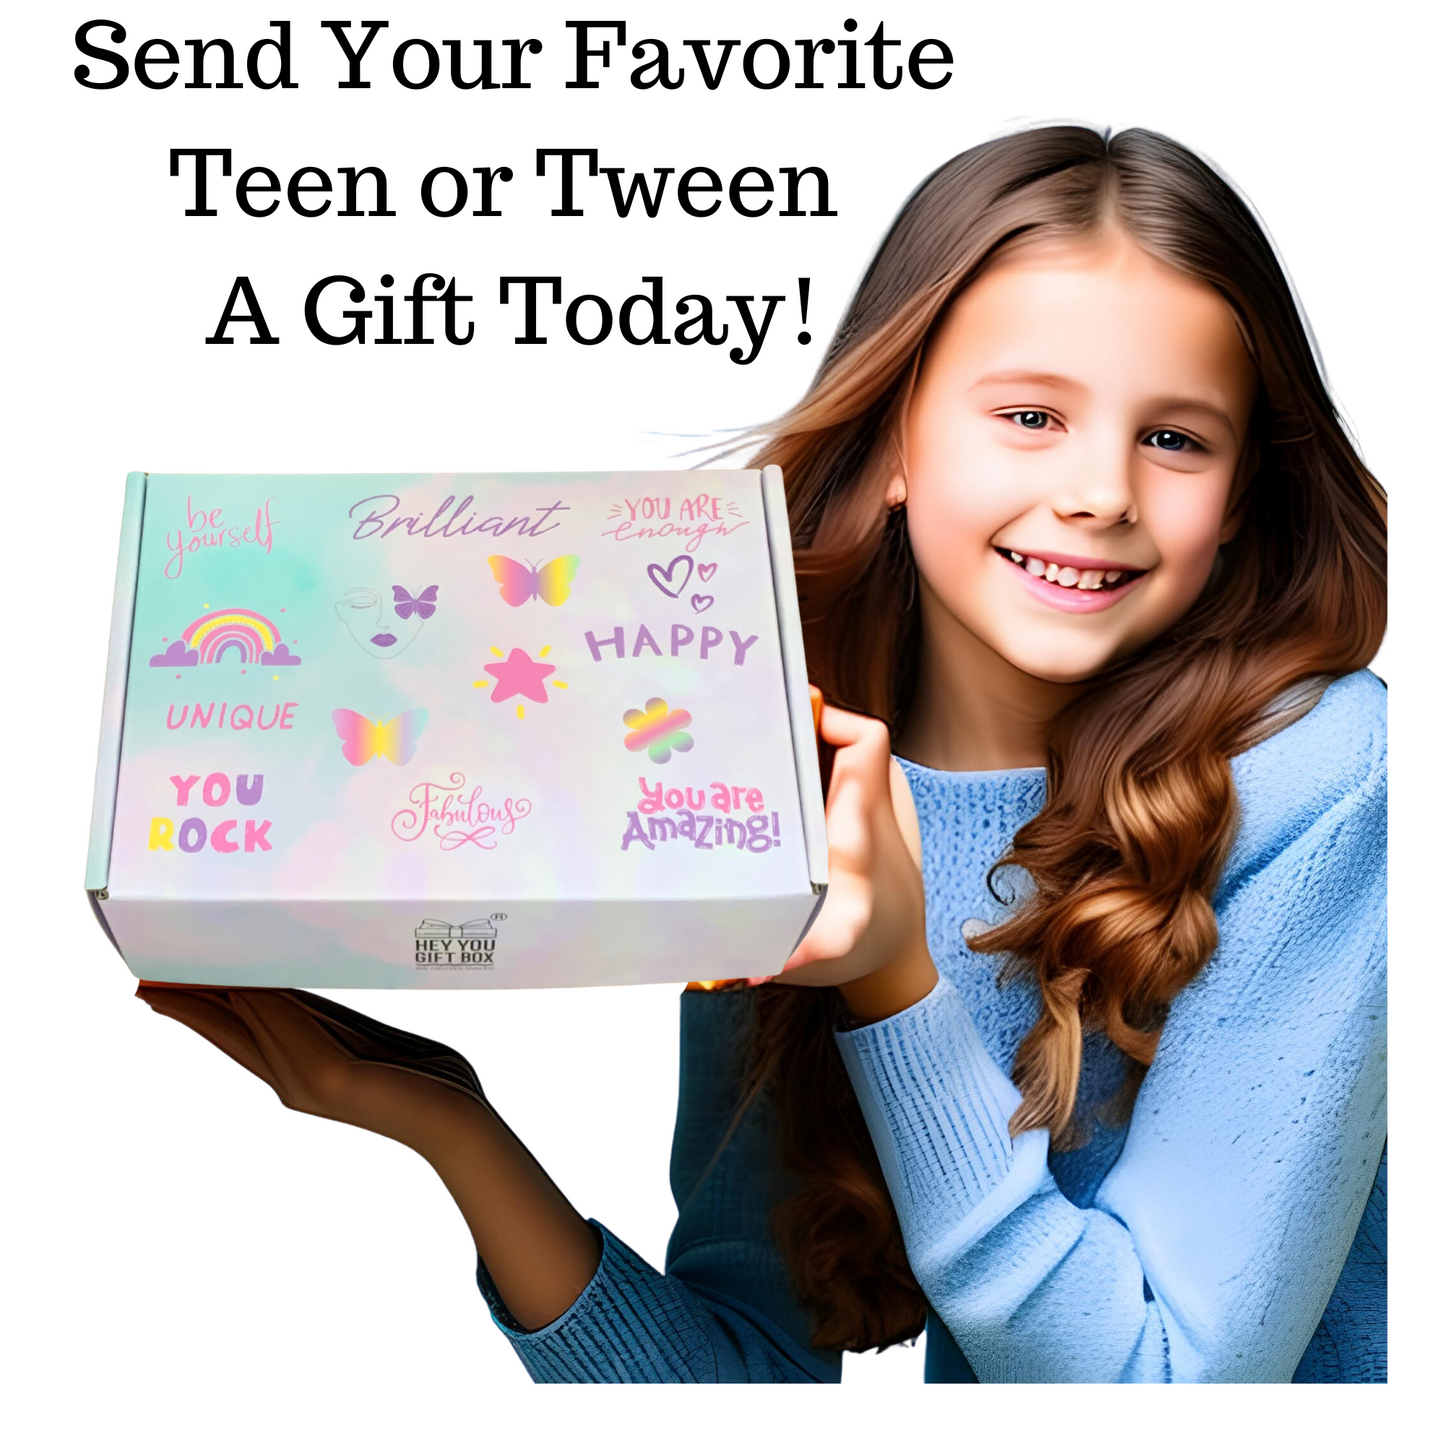 Girl tween teen preteen young girl holding a teen girl gift box from hey you gift box in Houston Baytown Texas Gift Shop